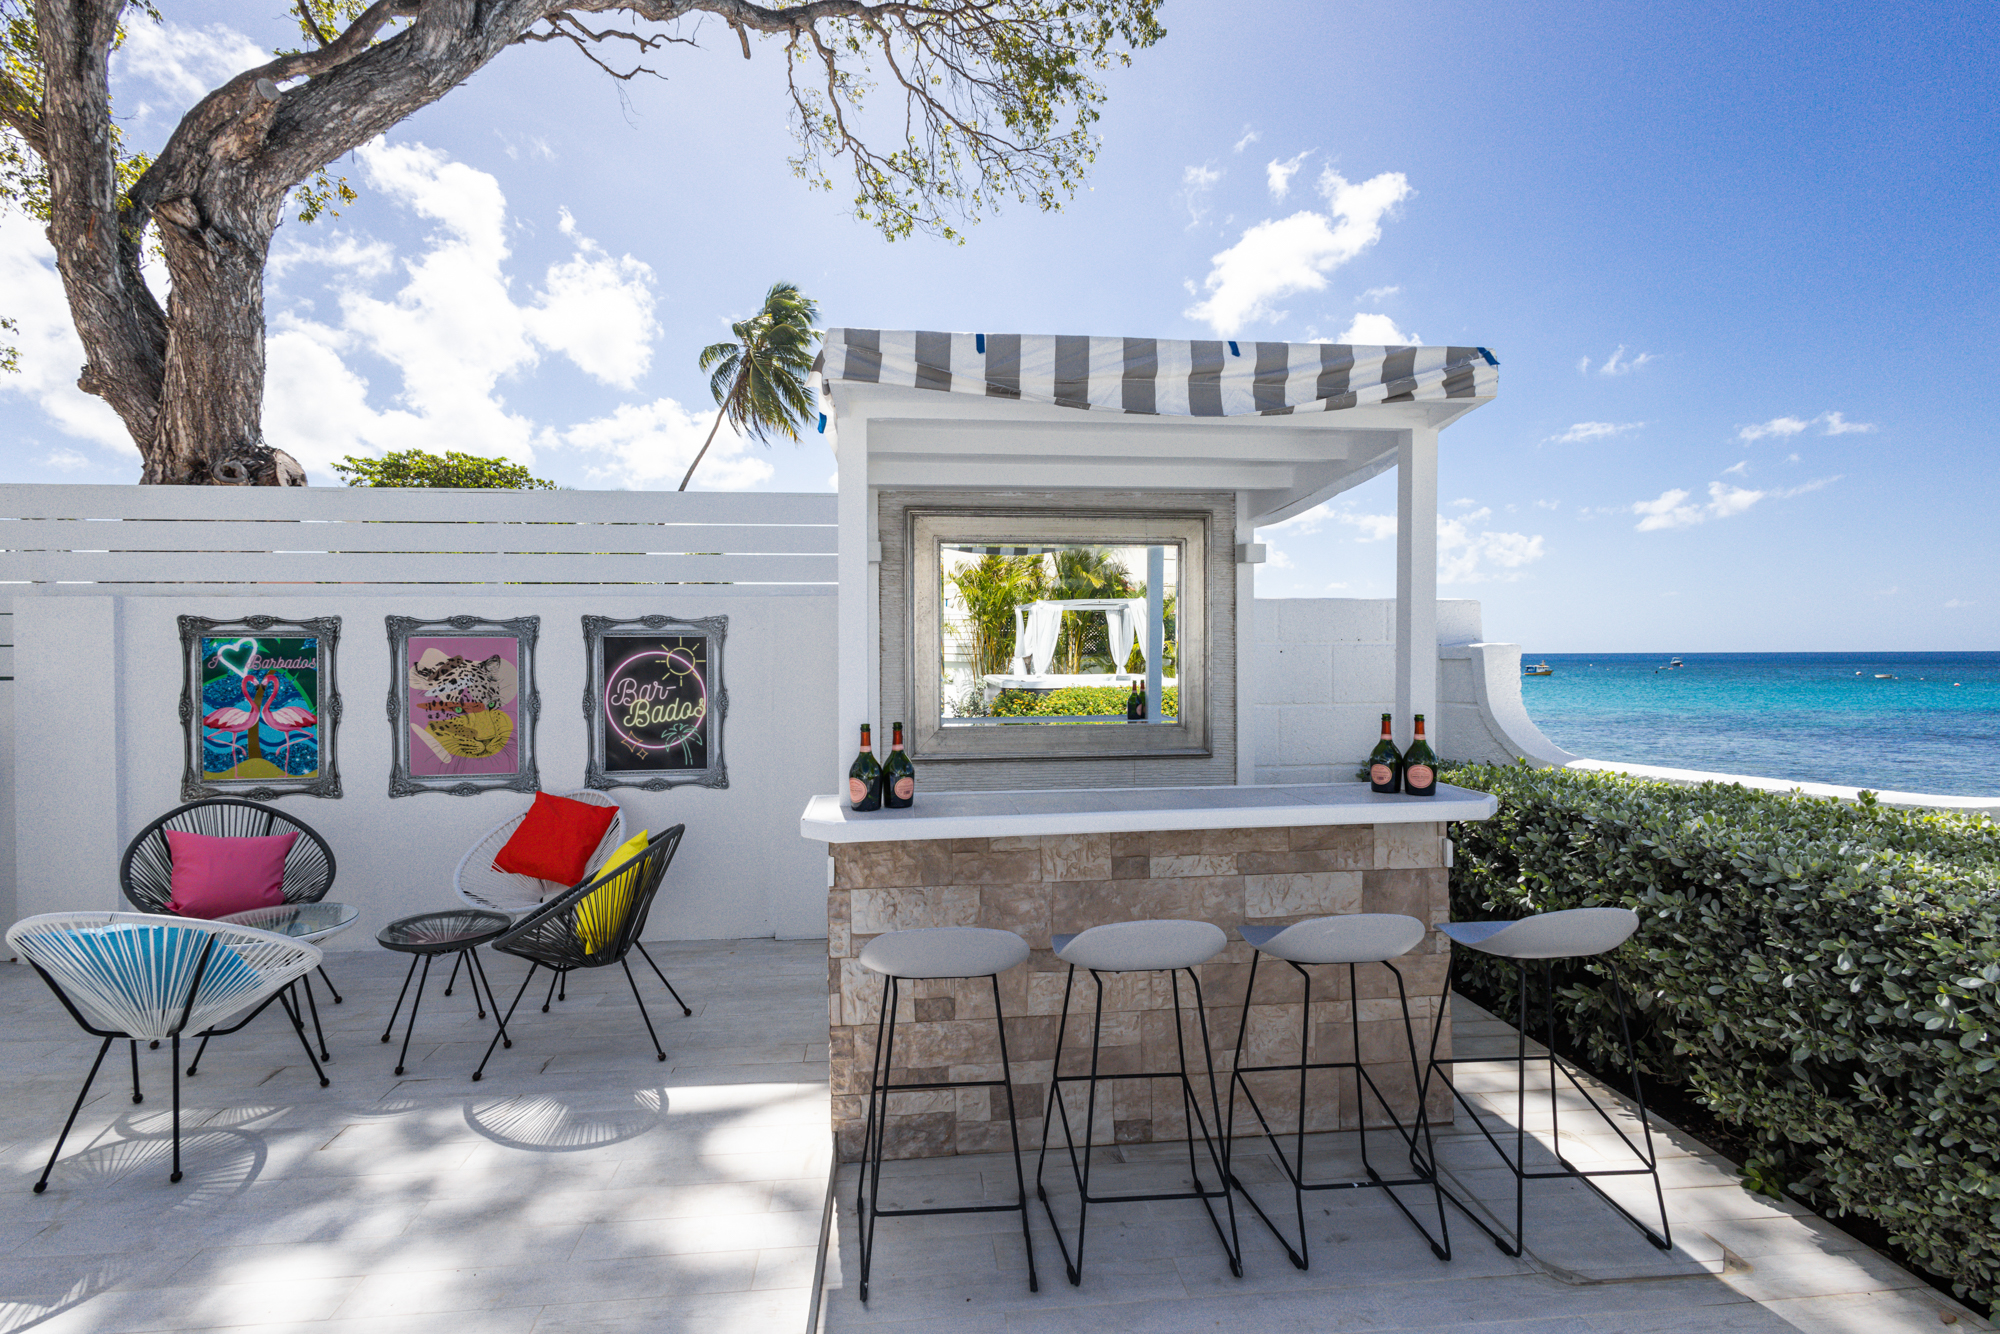 Barbados luxury modern beachfront villa with beach bar and lounge